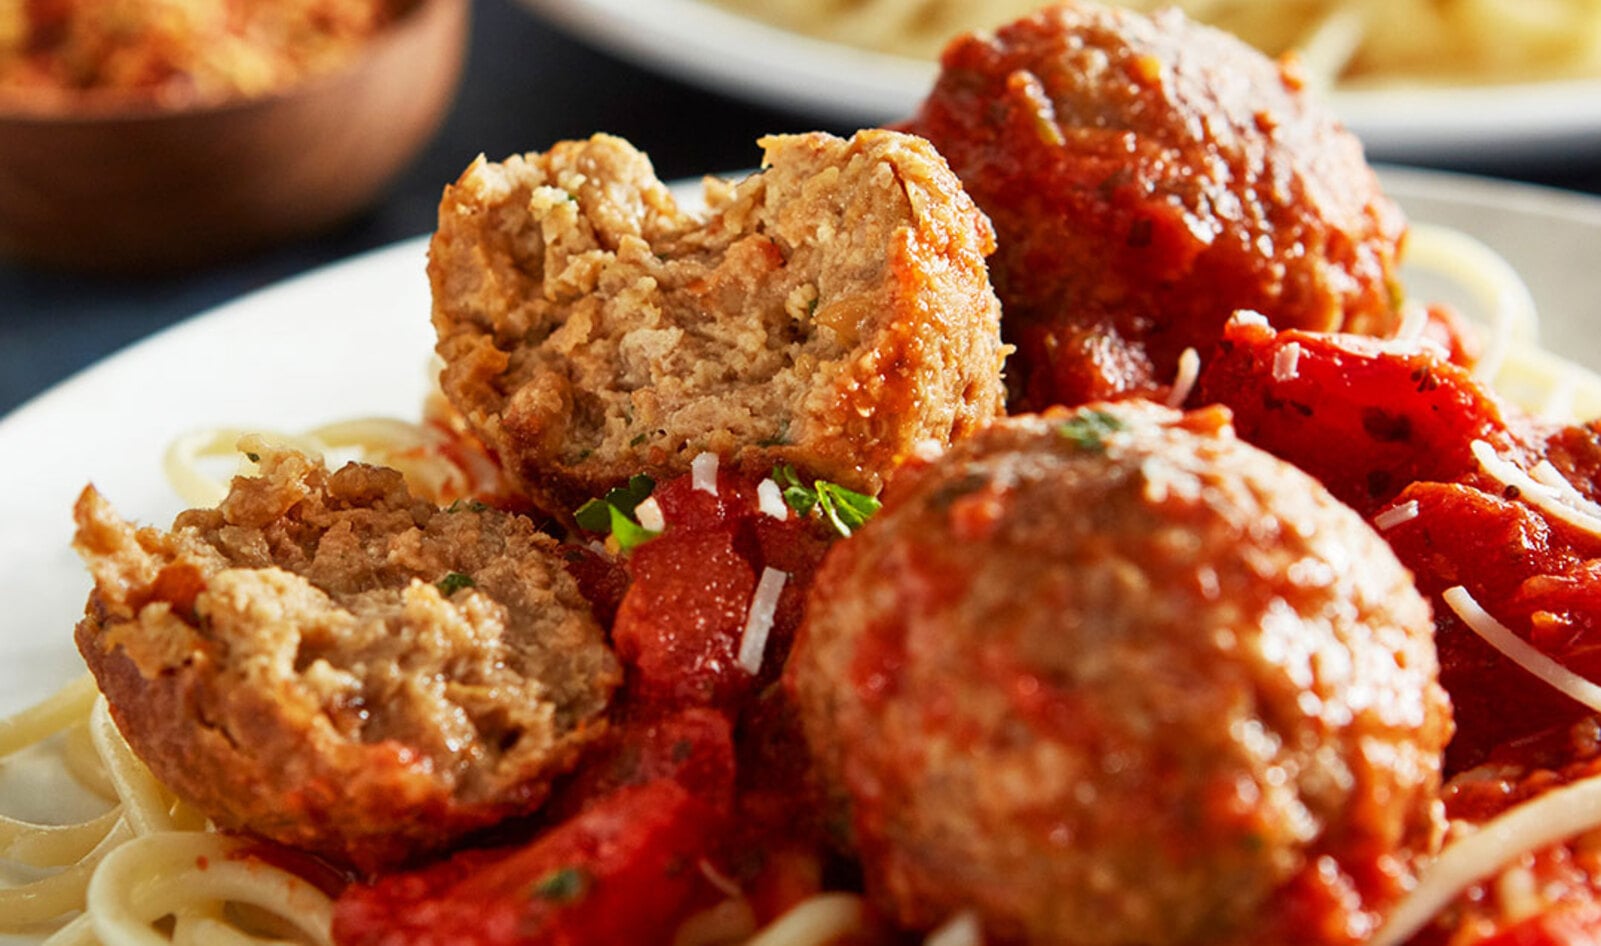 Old World Italian Brand Will Run 4,000 Commercials to Promote Vegan Beyond Beef Meatballs&nbsp;